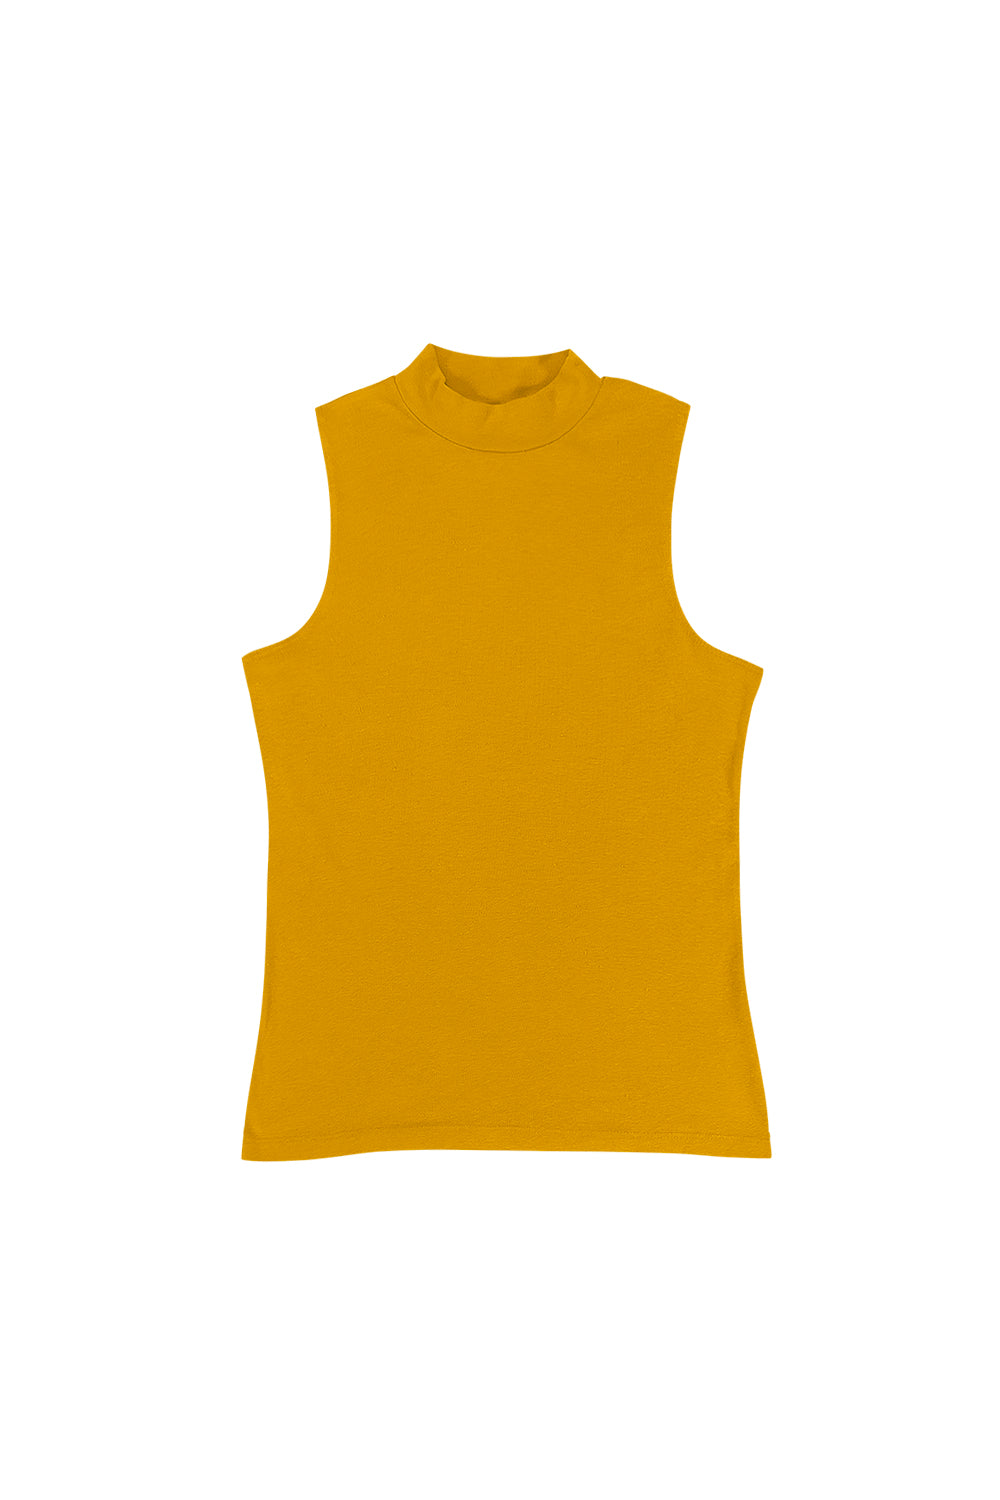 Mariposa Mock Shirt | Jungmaven Hemp Clothing & Accessories / Color: Spicy Mustard